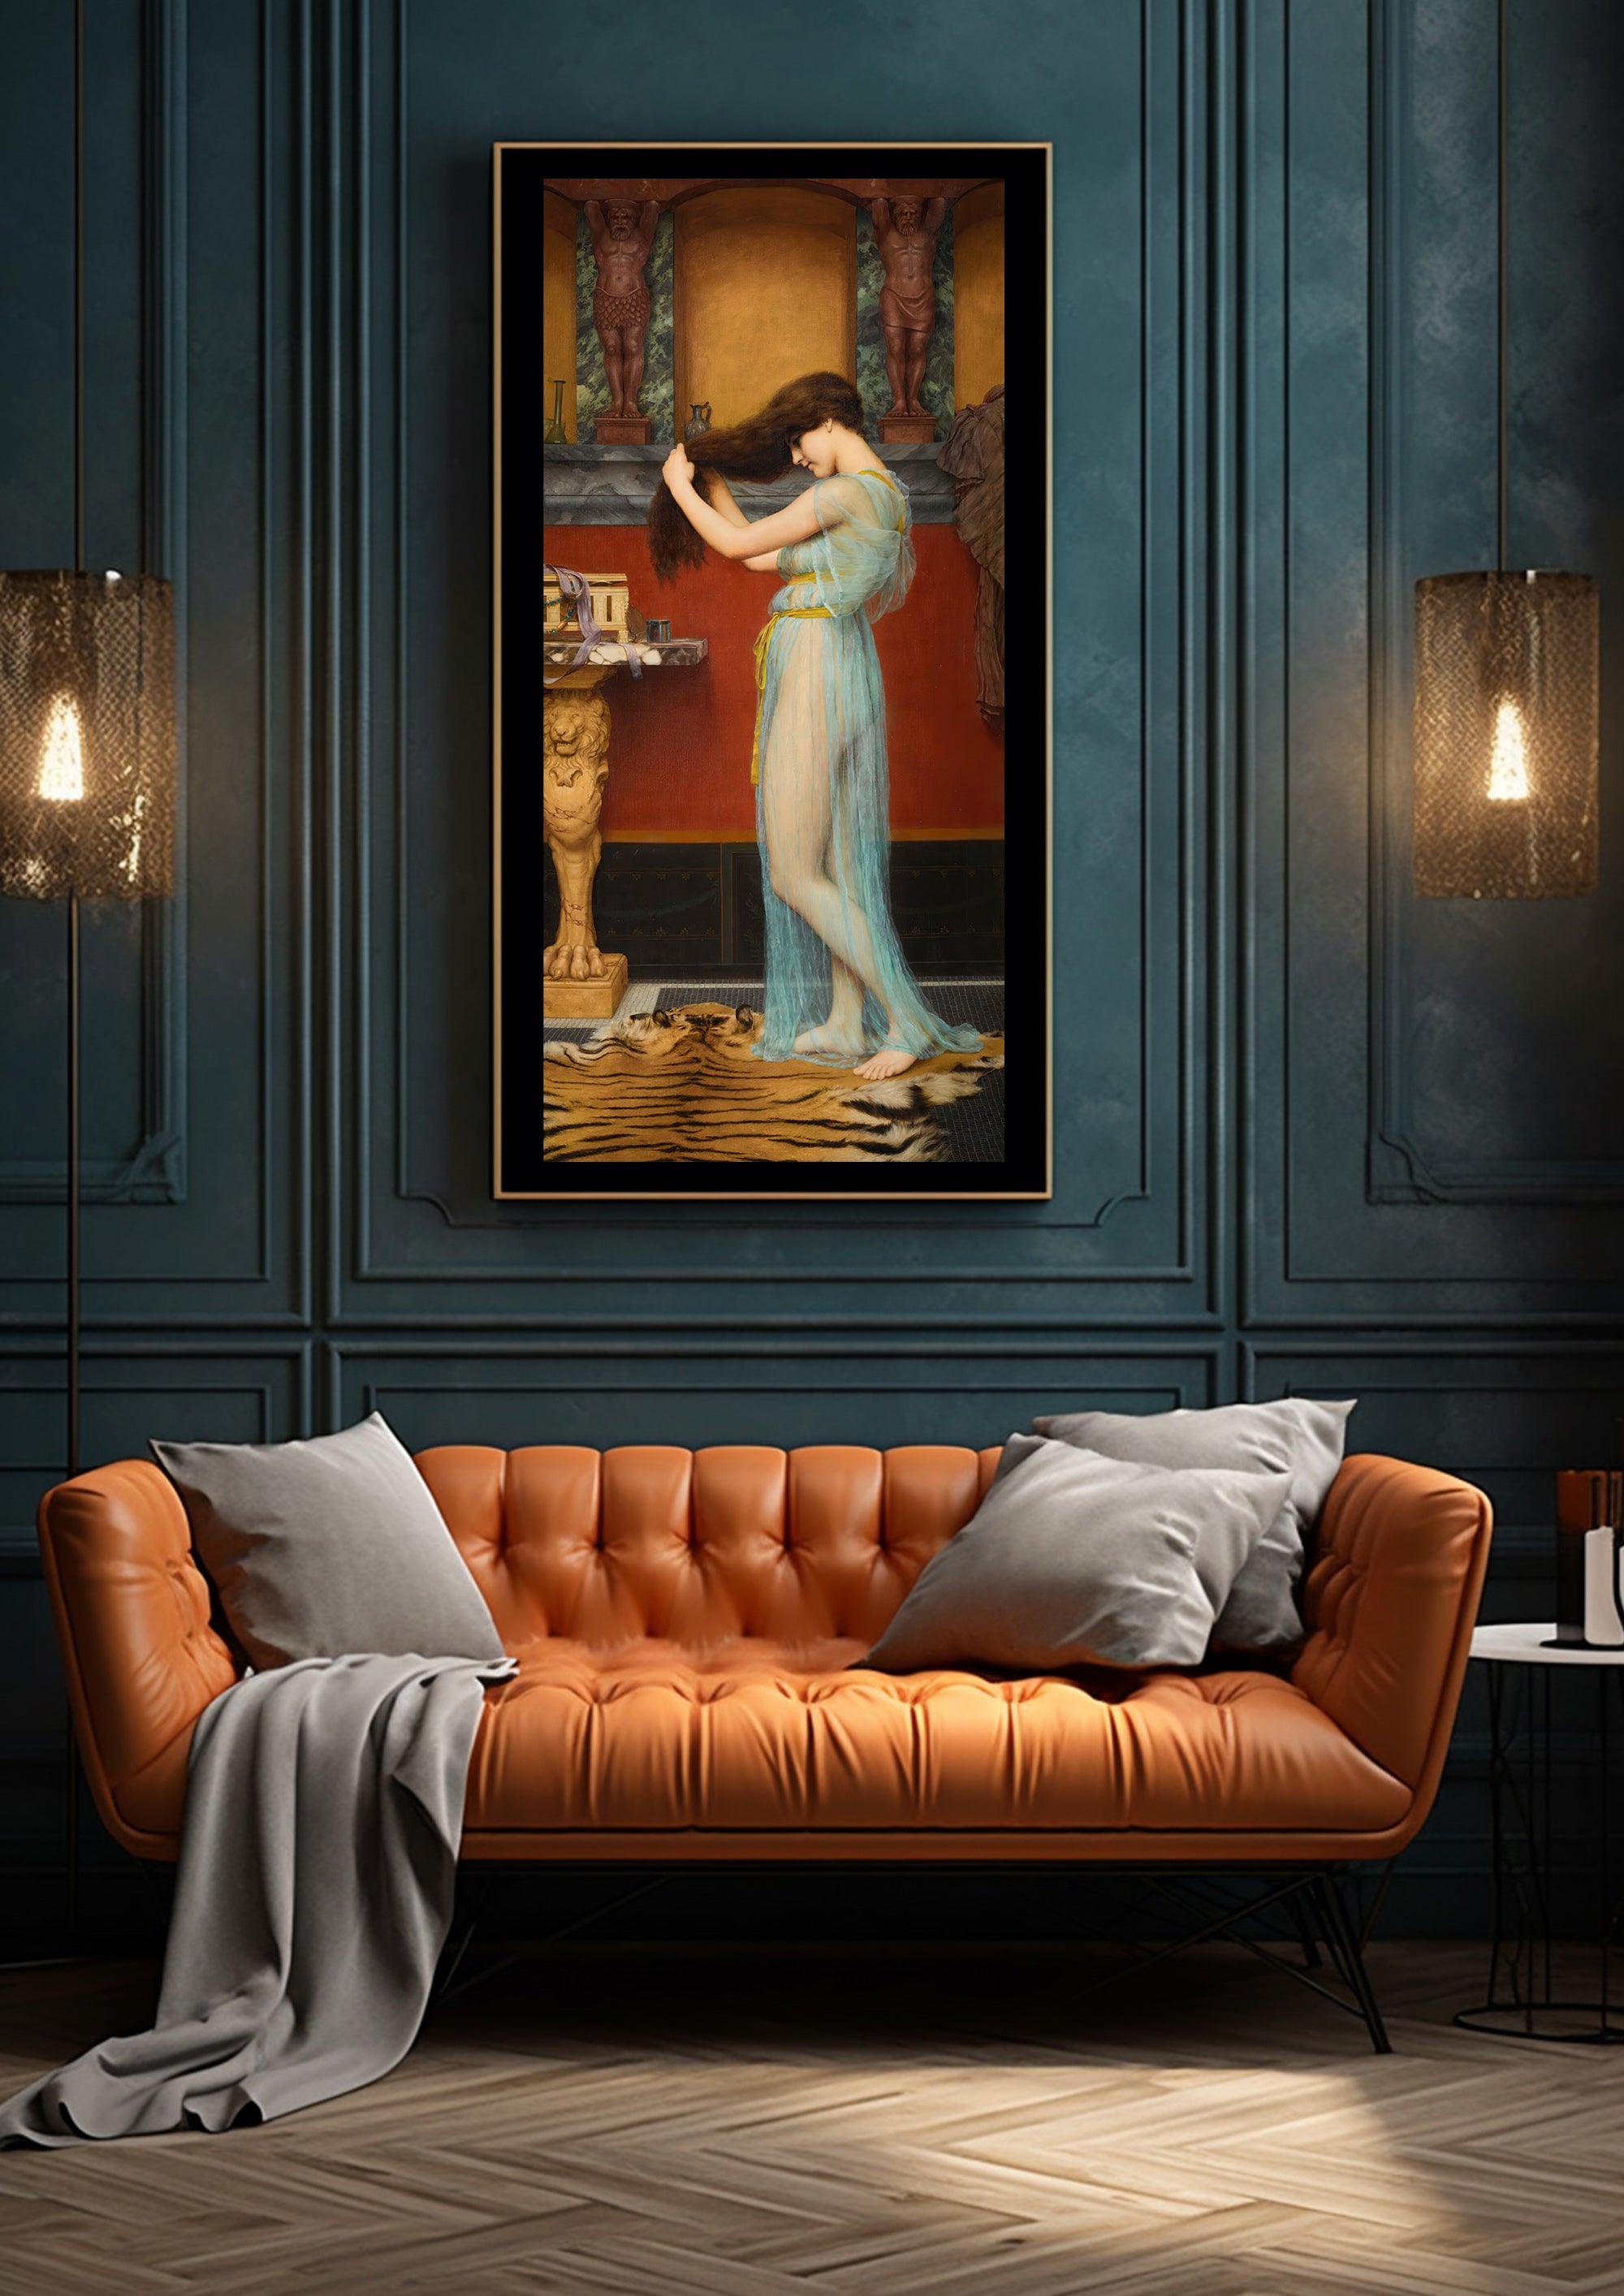 Romanticism,Wall Art,Canvas Print,Framed RC 9 - ParfaiteArt